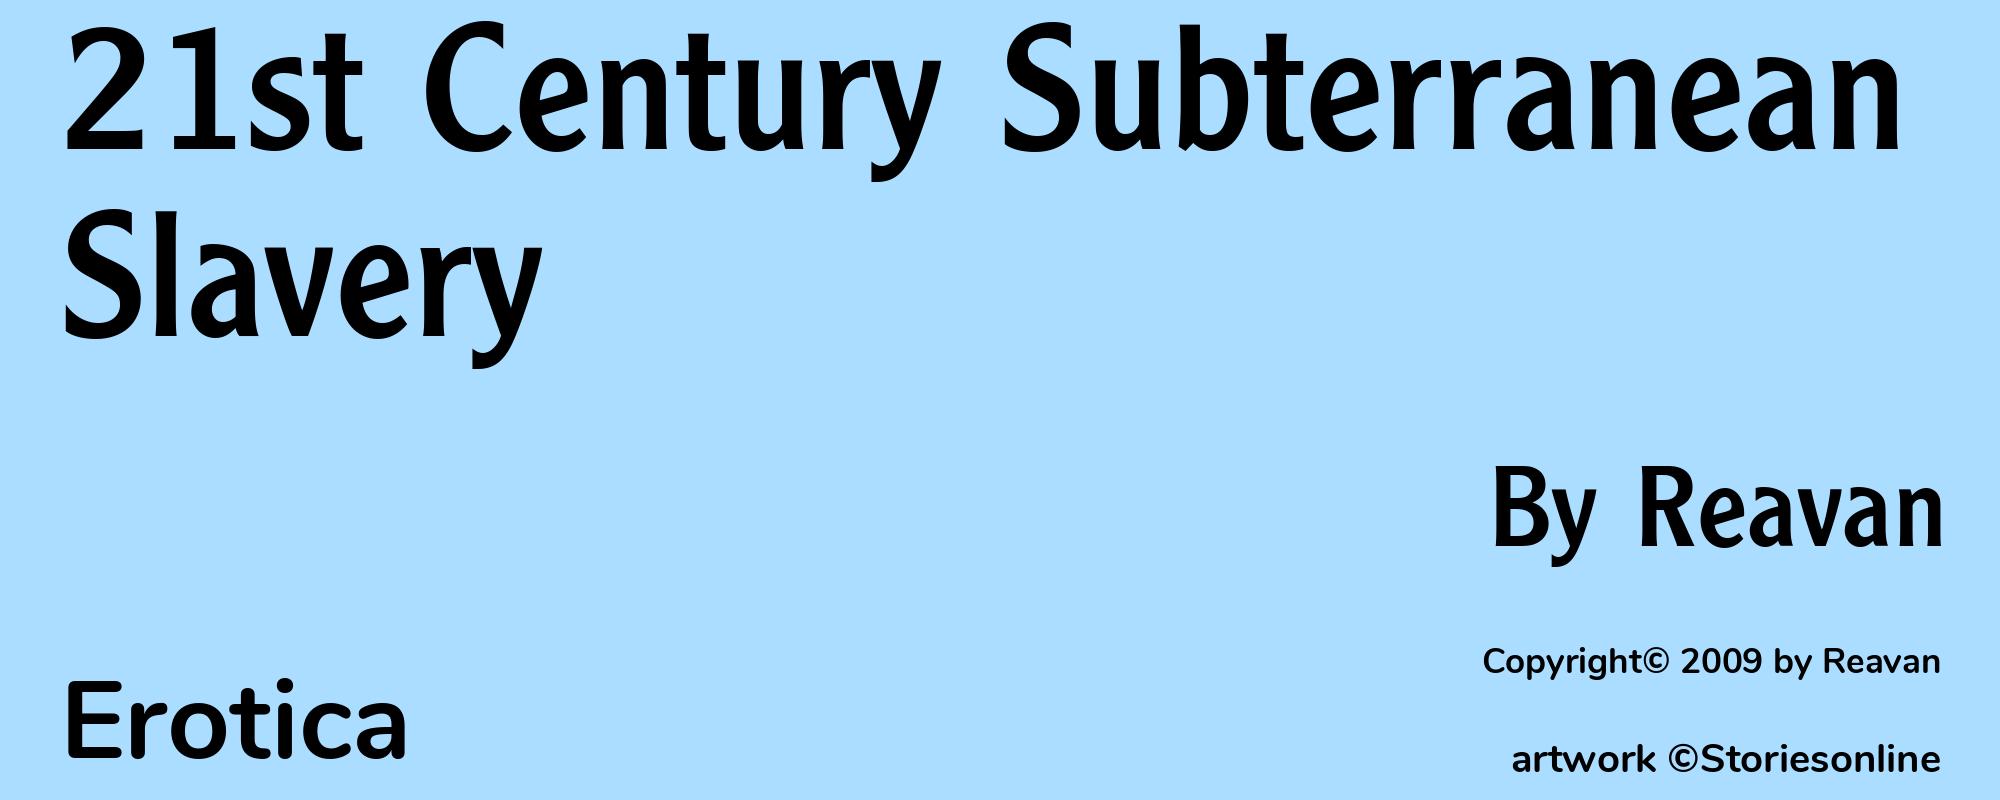 21st Century Subterranean Slavery - Cover